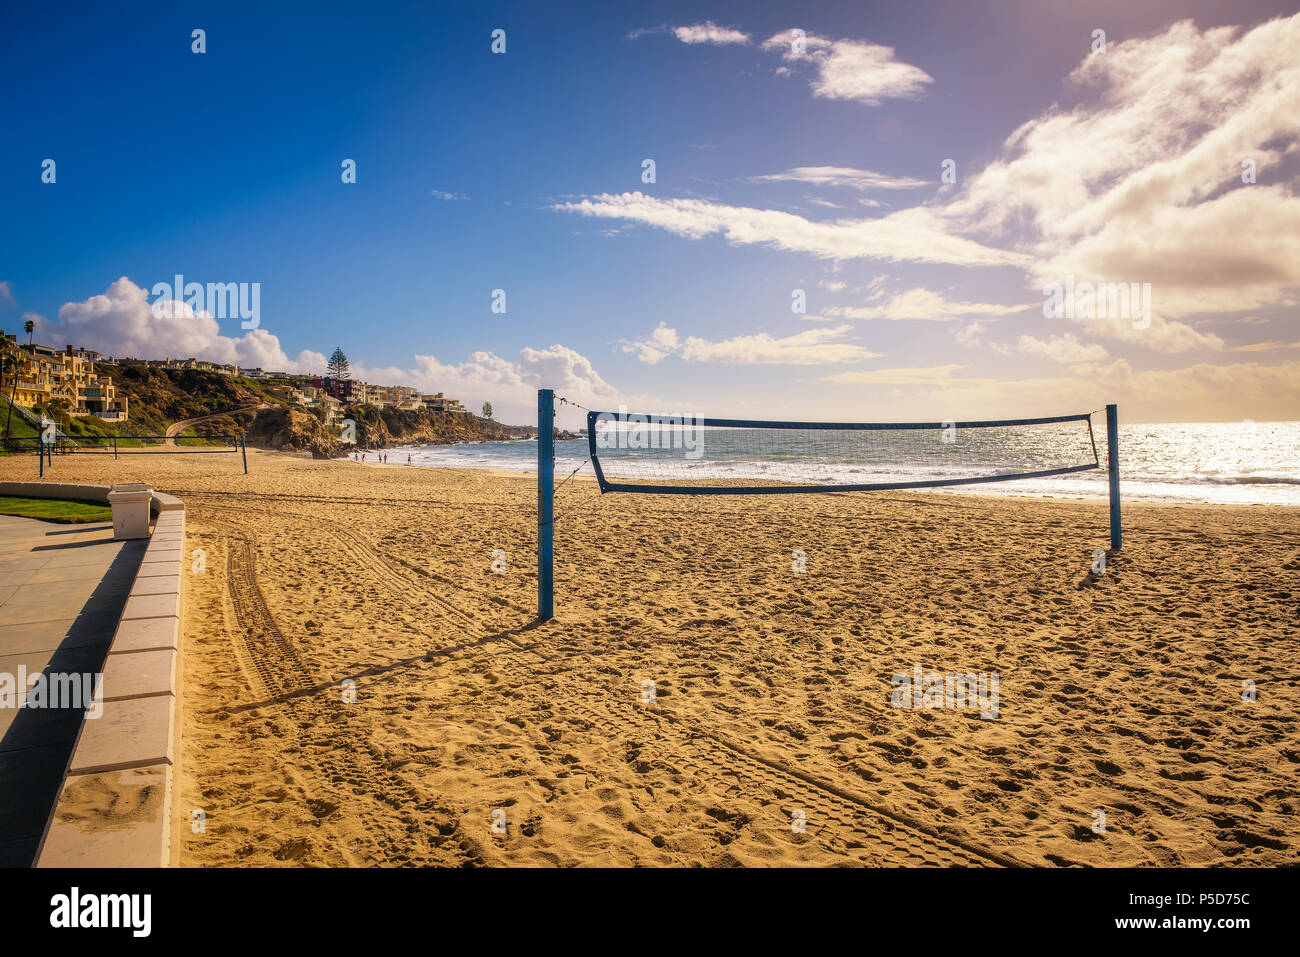 Filet de beach-volley sur la plage d'État Corona del Mar, près de Los Angeles Banque D'Images